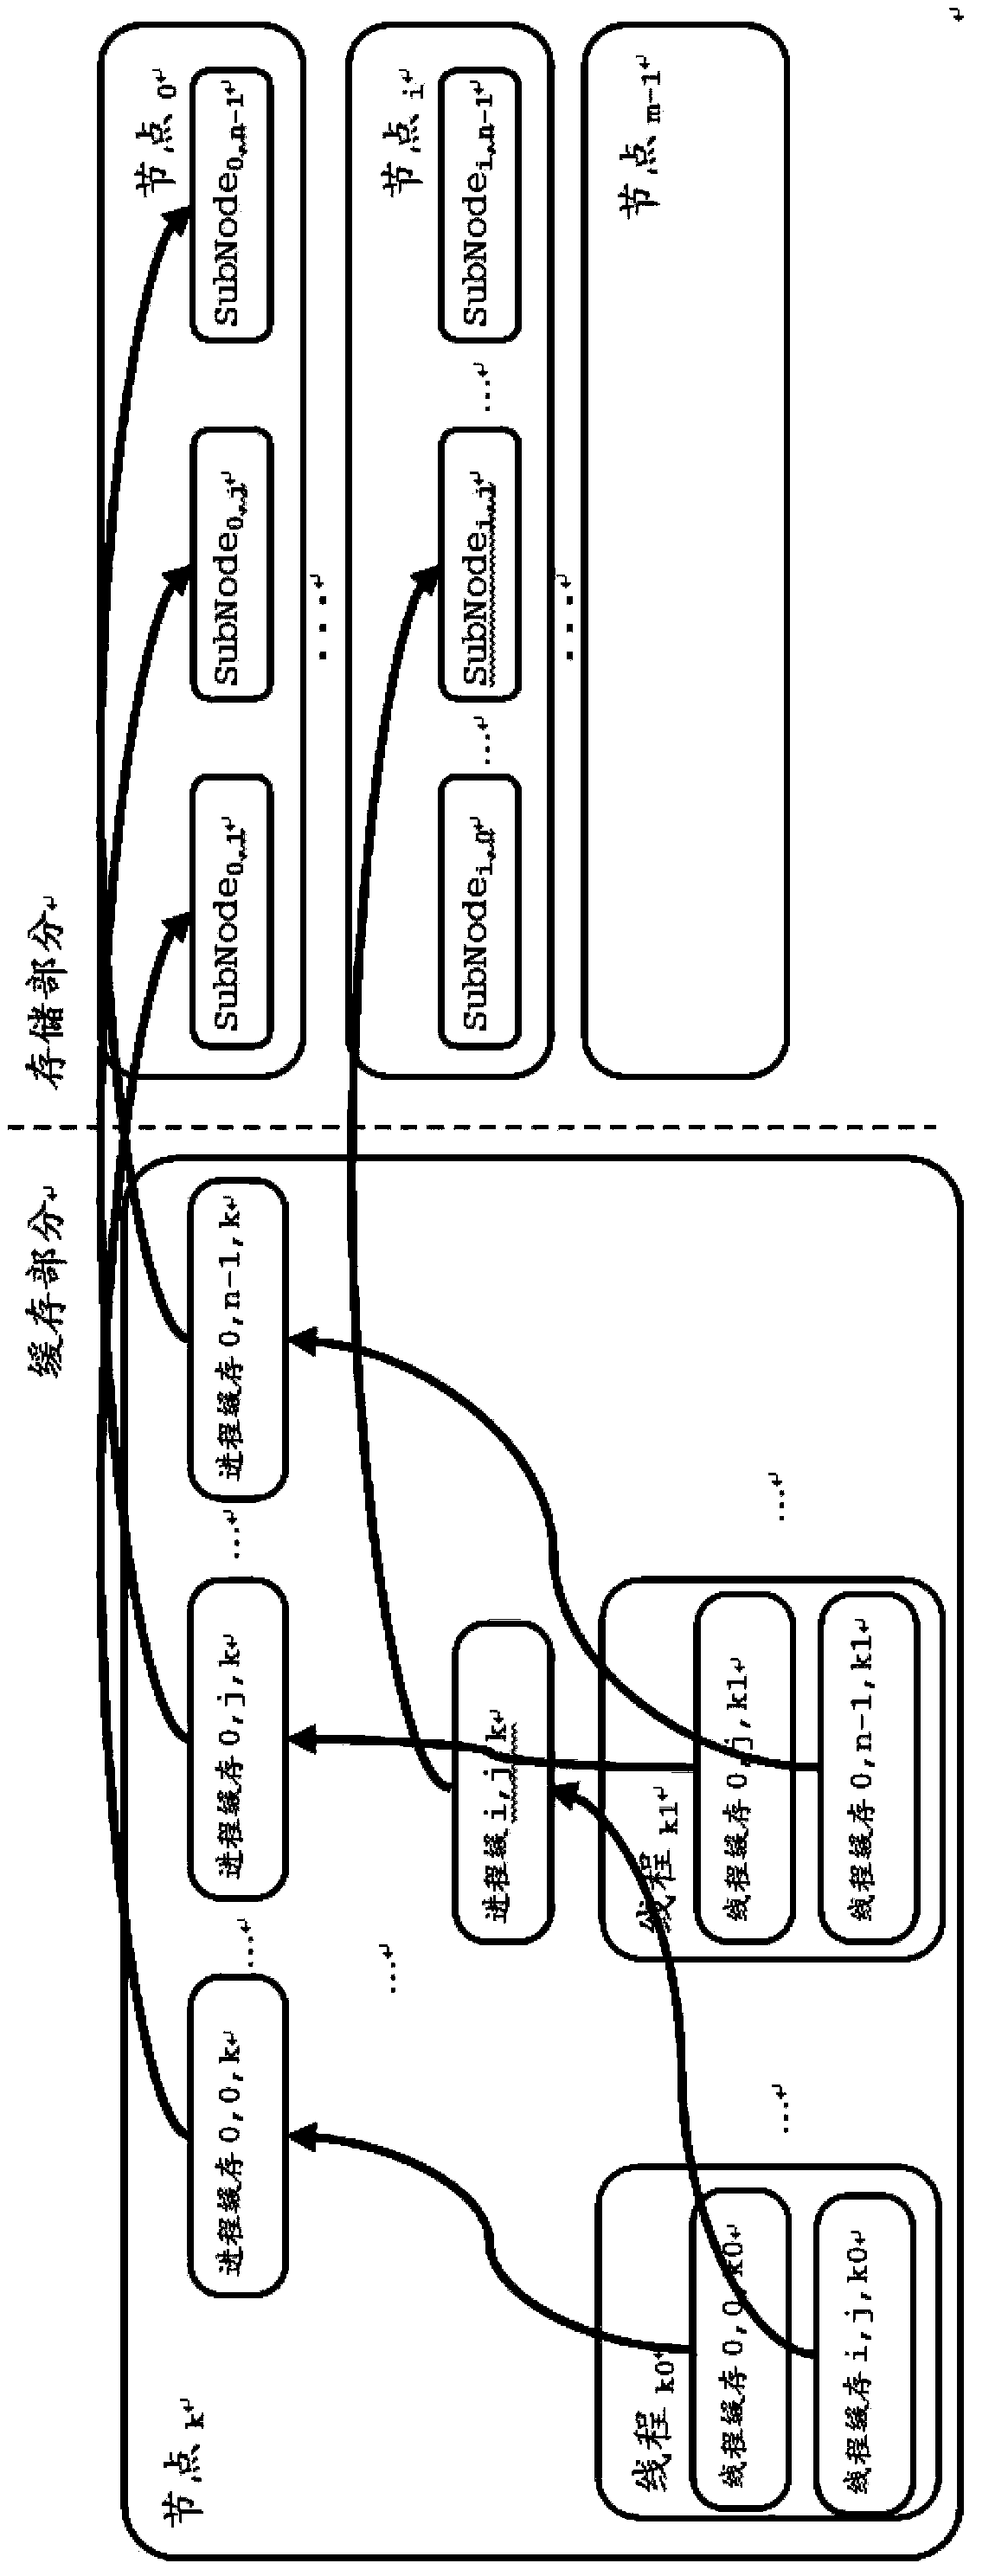 Distributed computing method and device